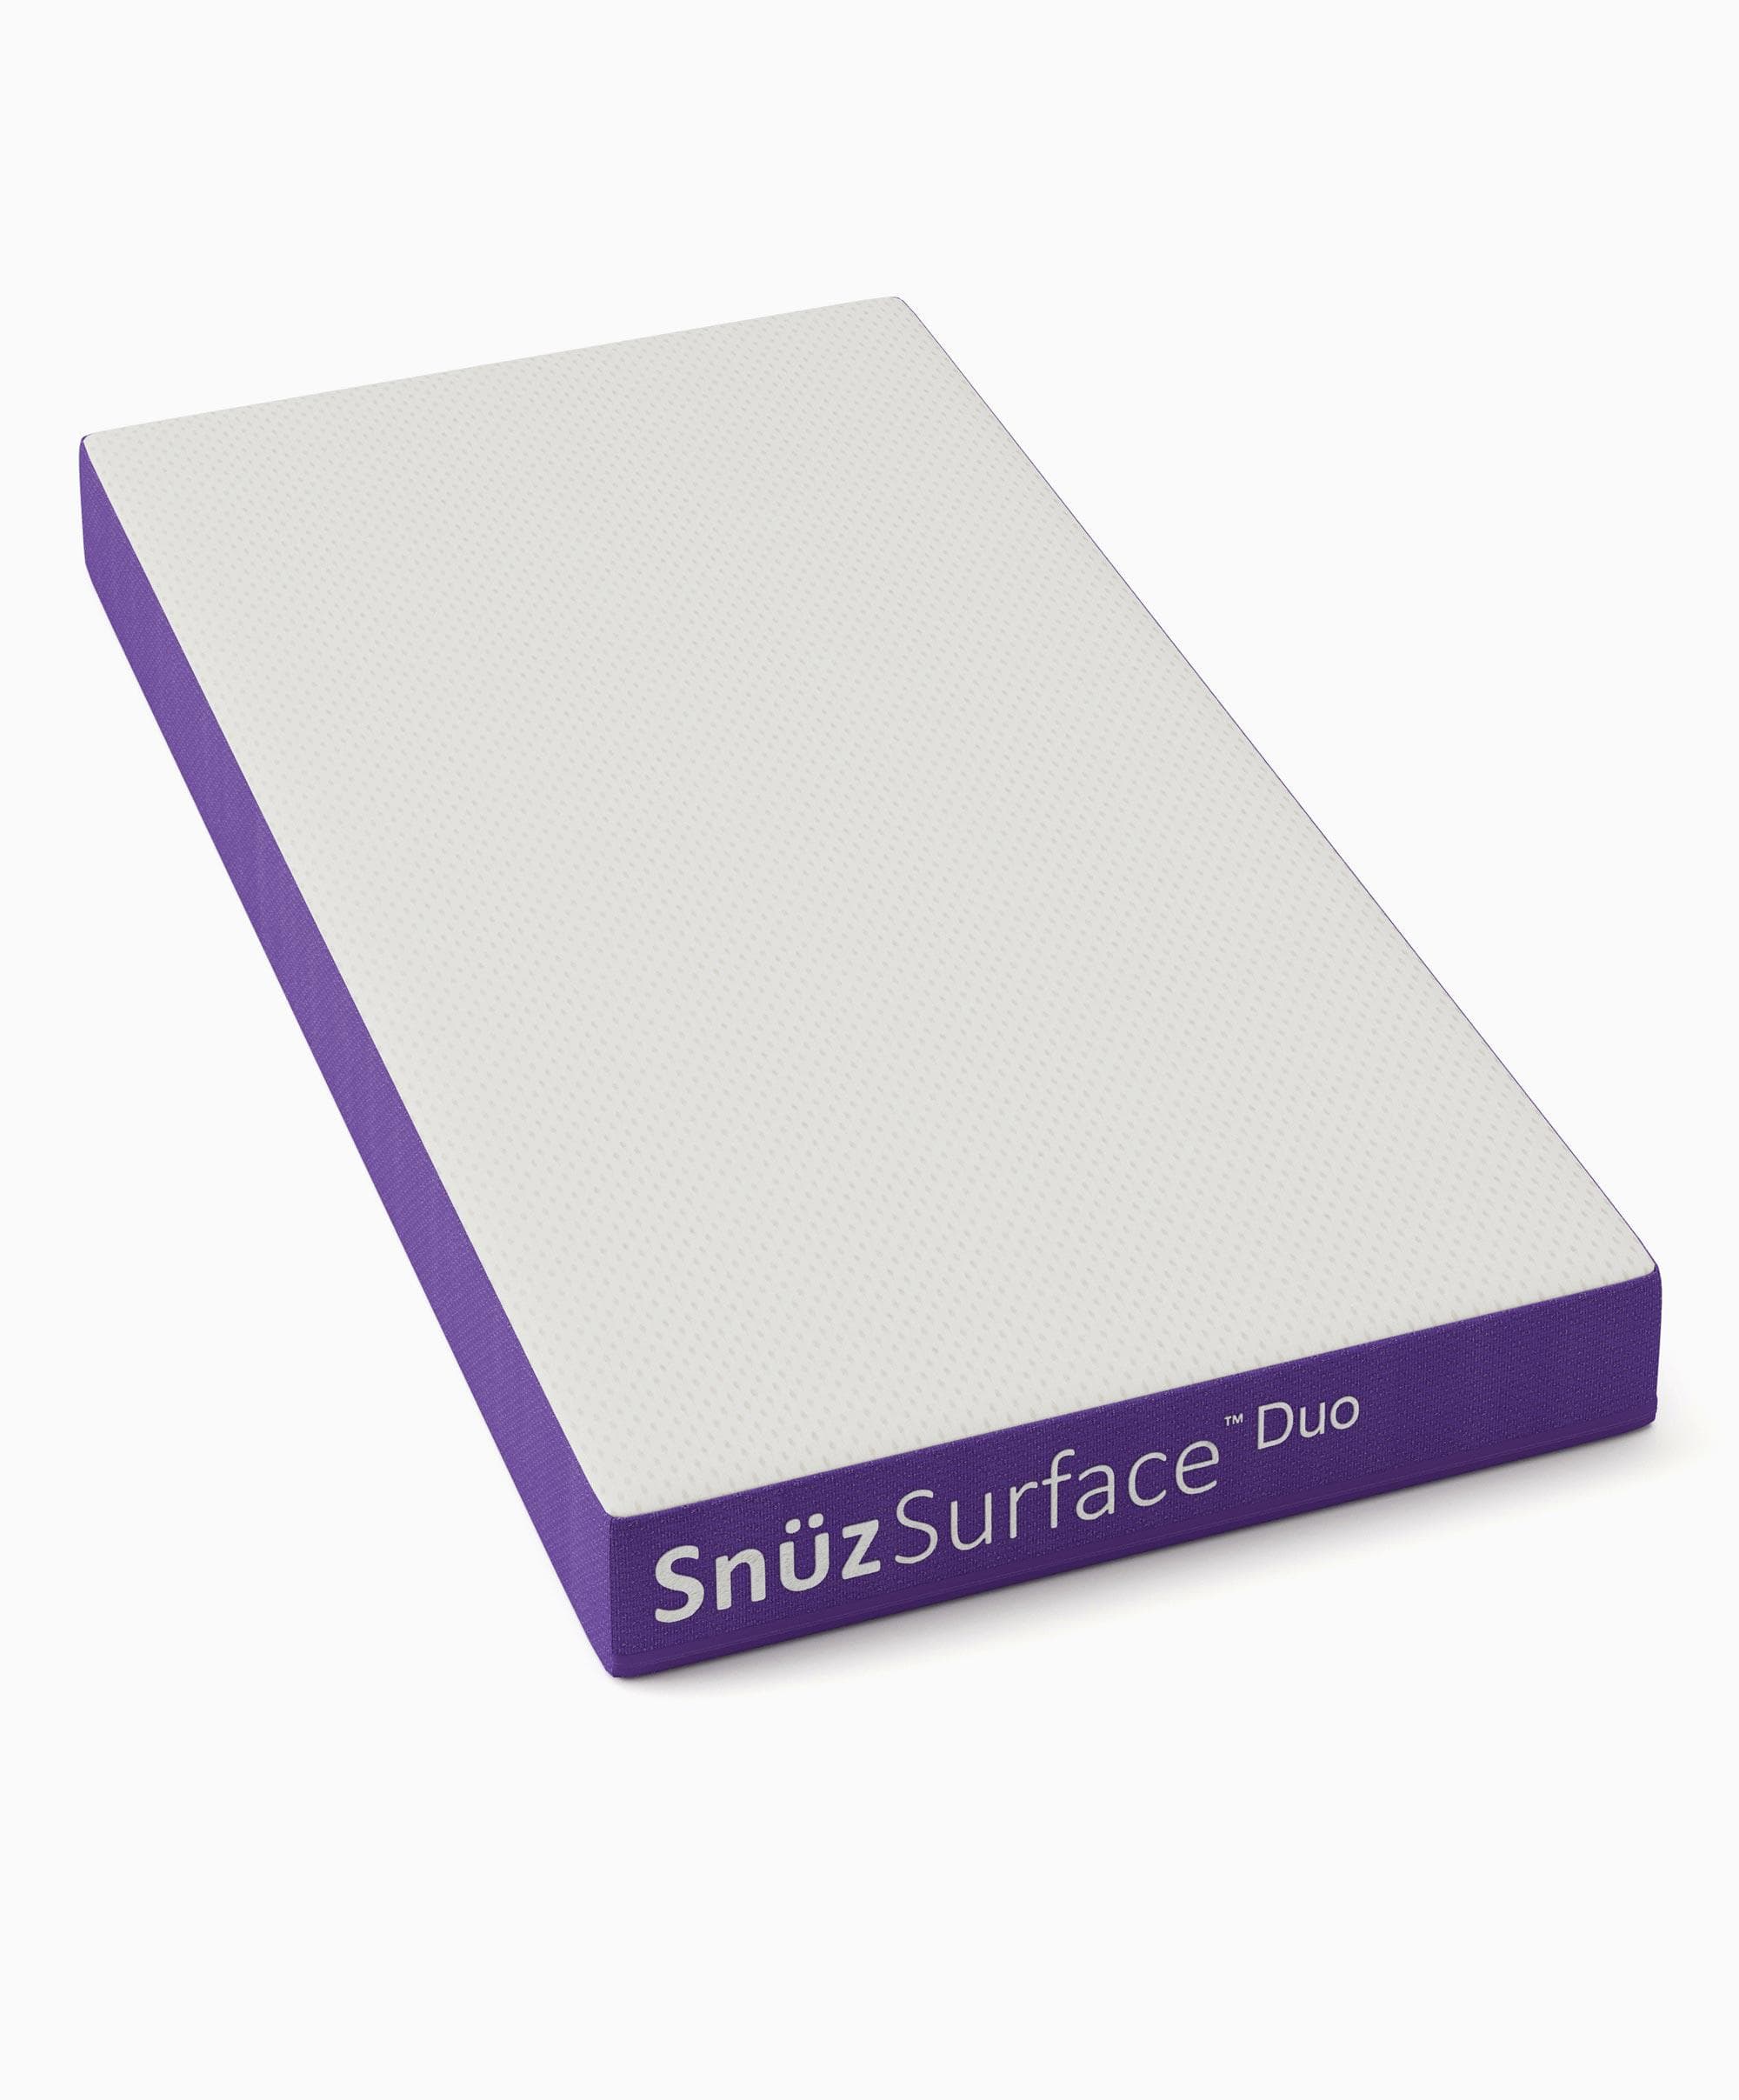 SnuzSurface Duo Cotbed Mattress - White/Purple